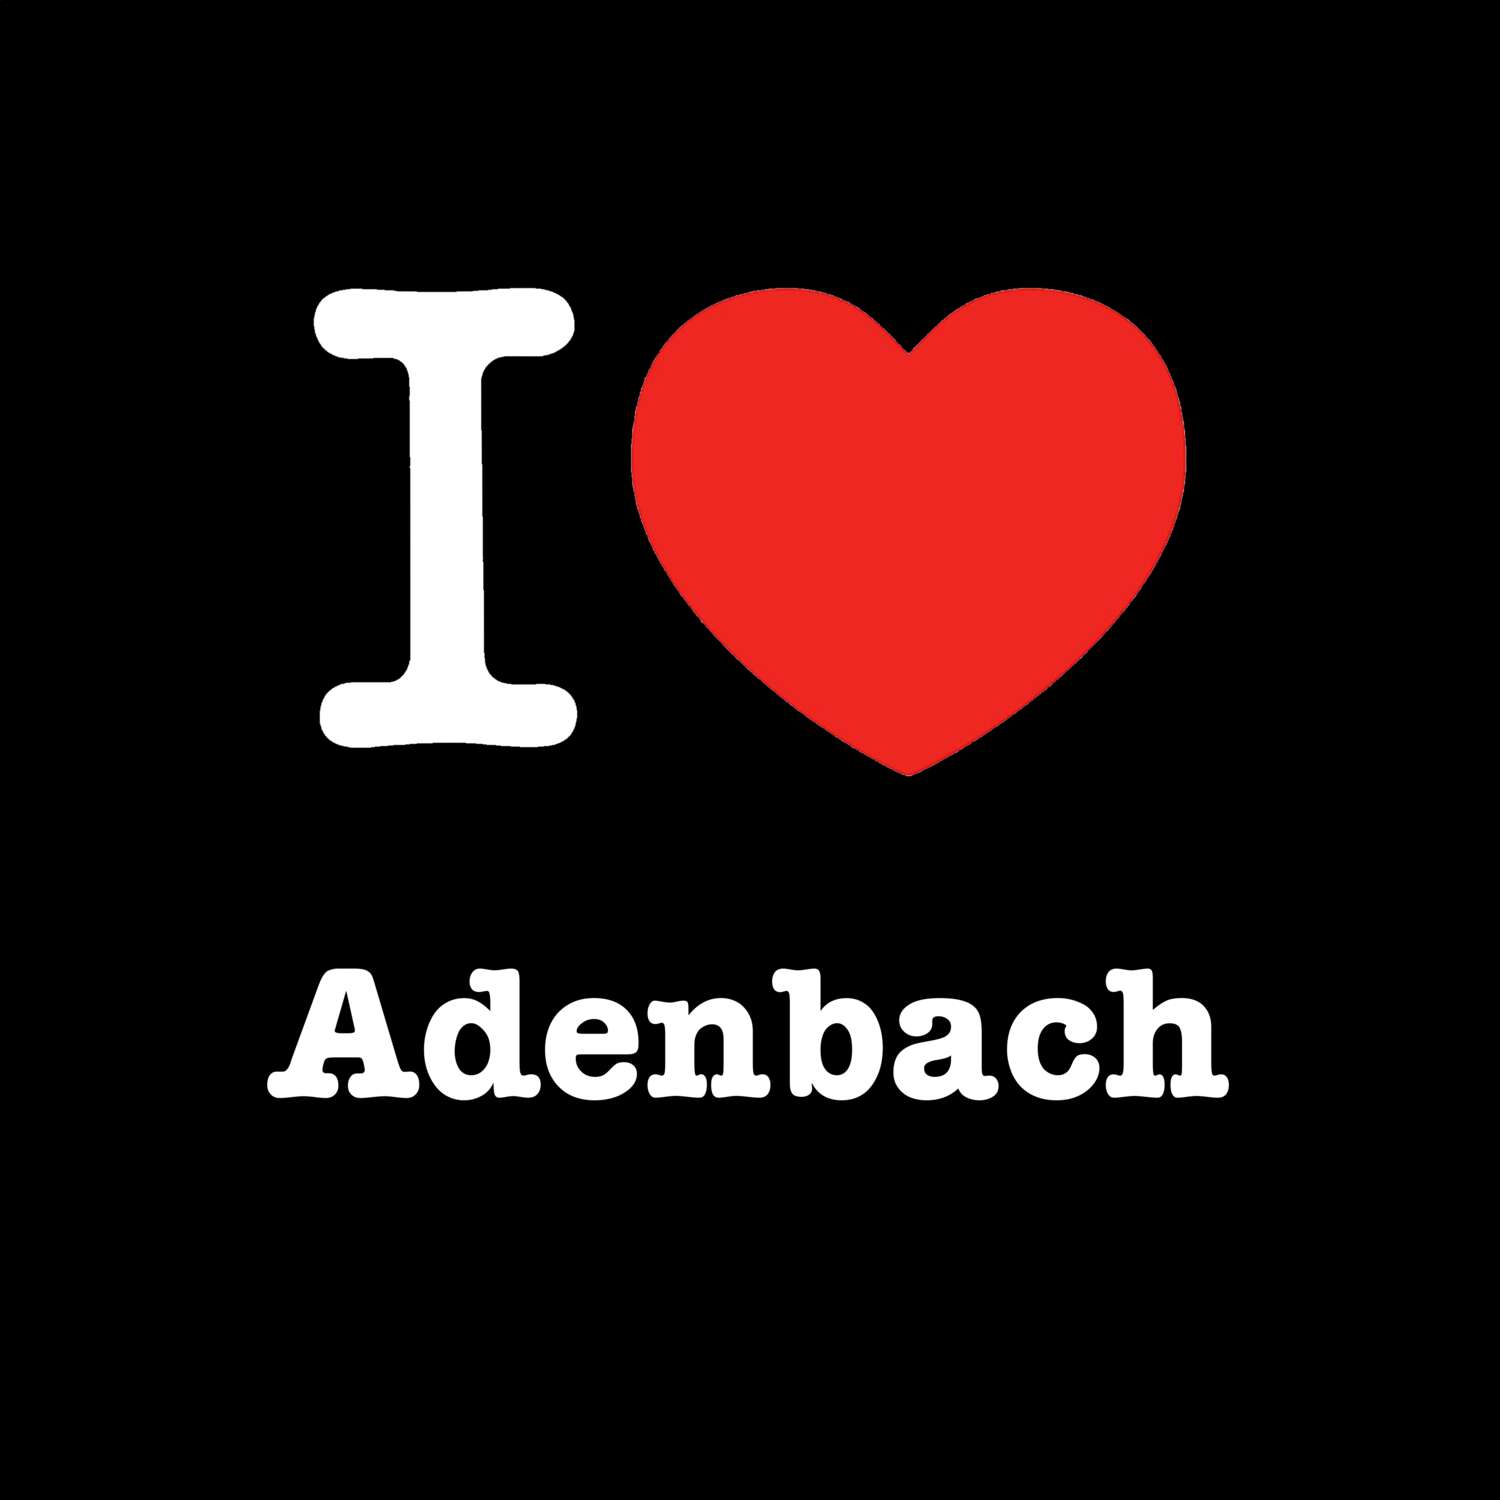 Adenbach T-Shirt »I love«